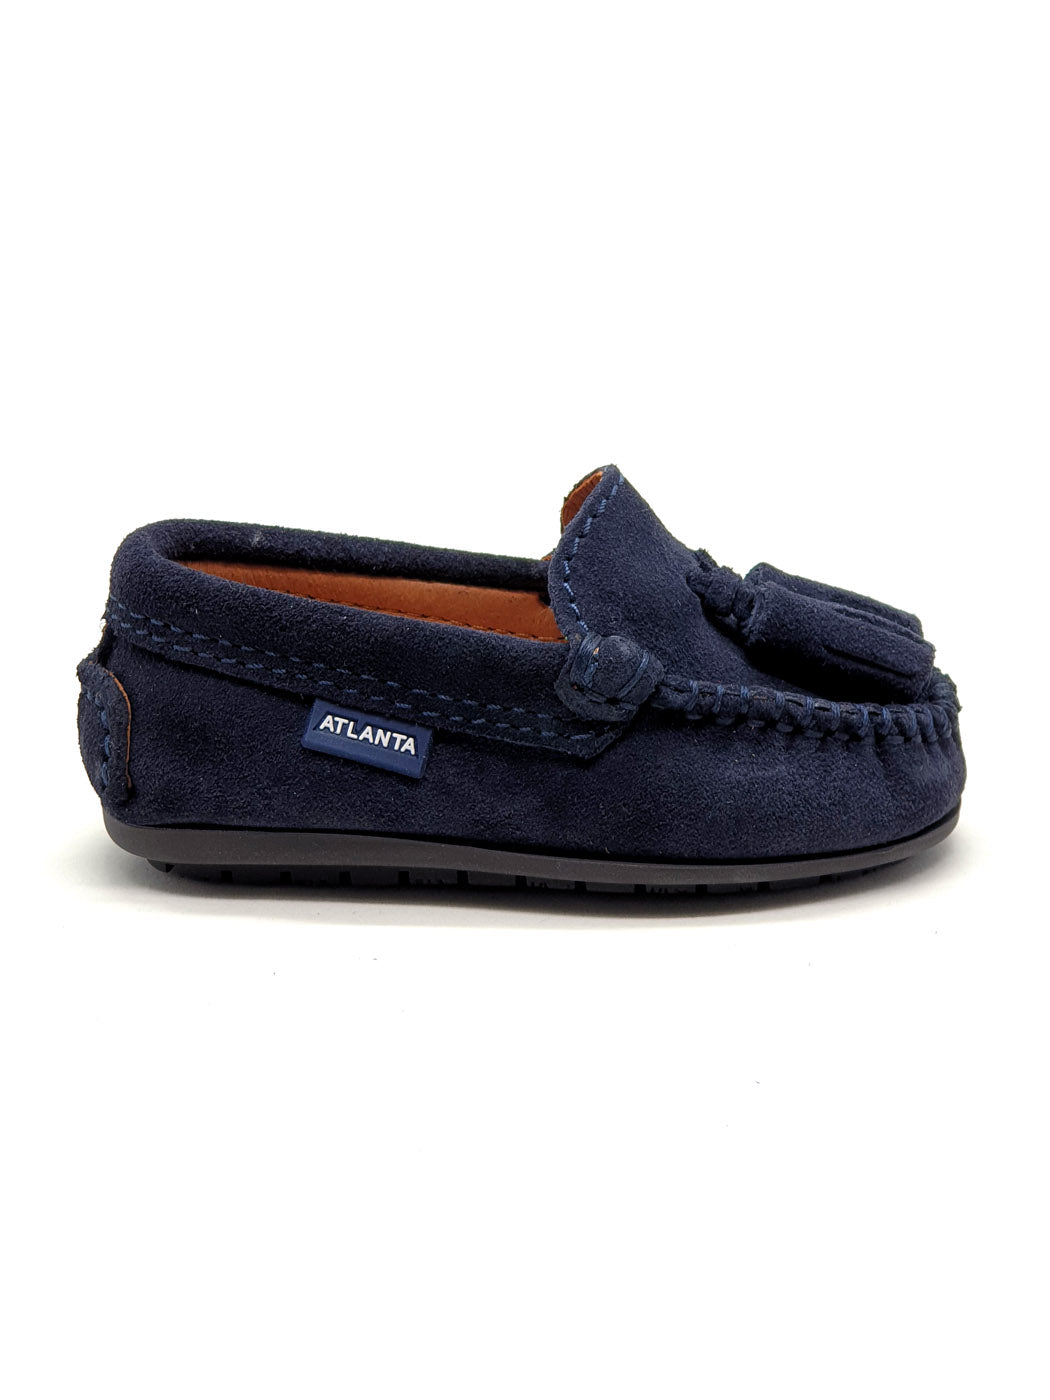 Atlanta Mocassin-Baby Shoes Moccasins Blue Dark-016G009